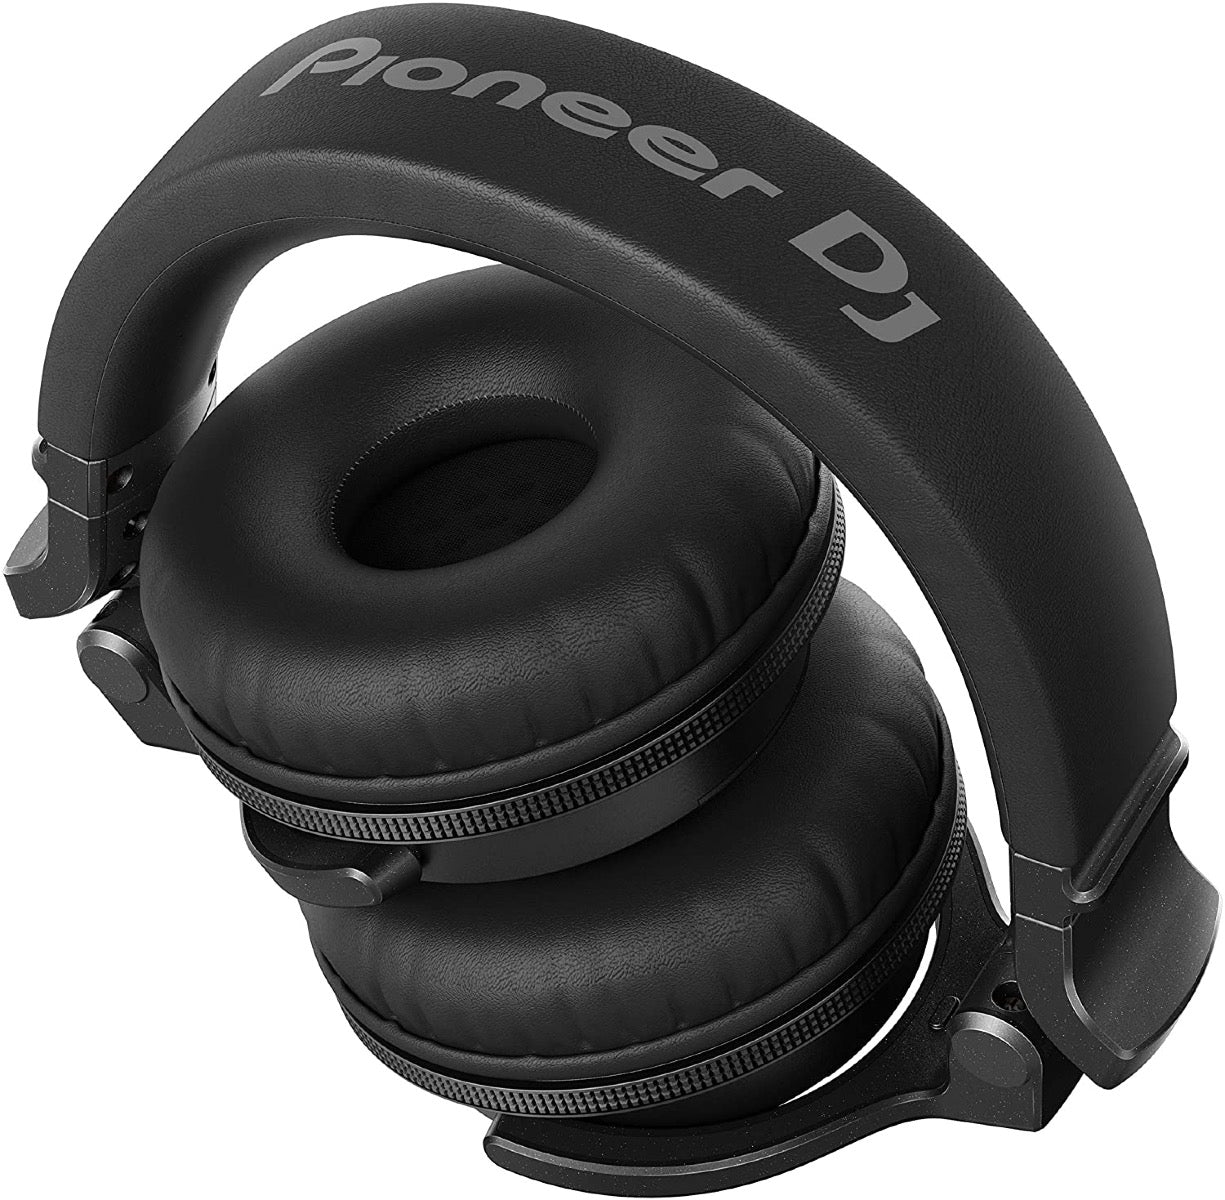 Pioneer DJ HDJ-CUE1-BT On-ear Bluetooth DJ Headphone - Black